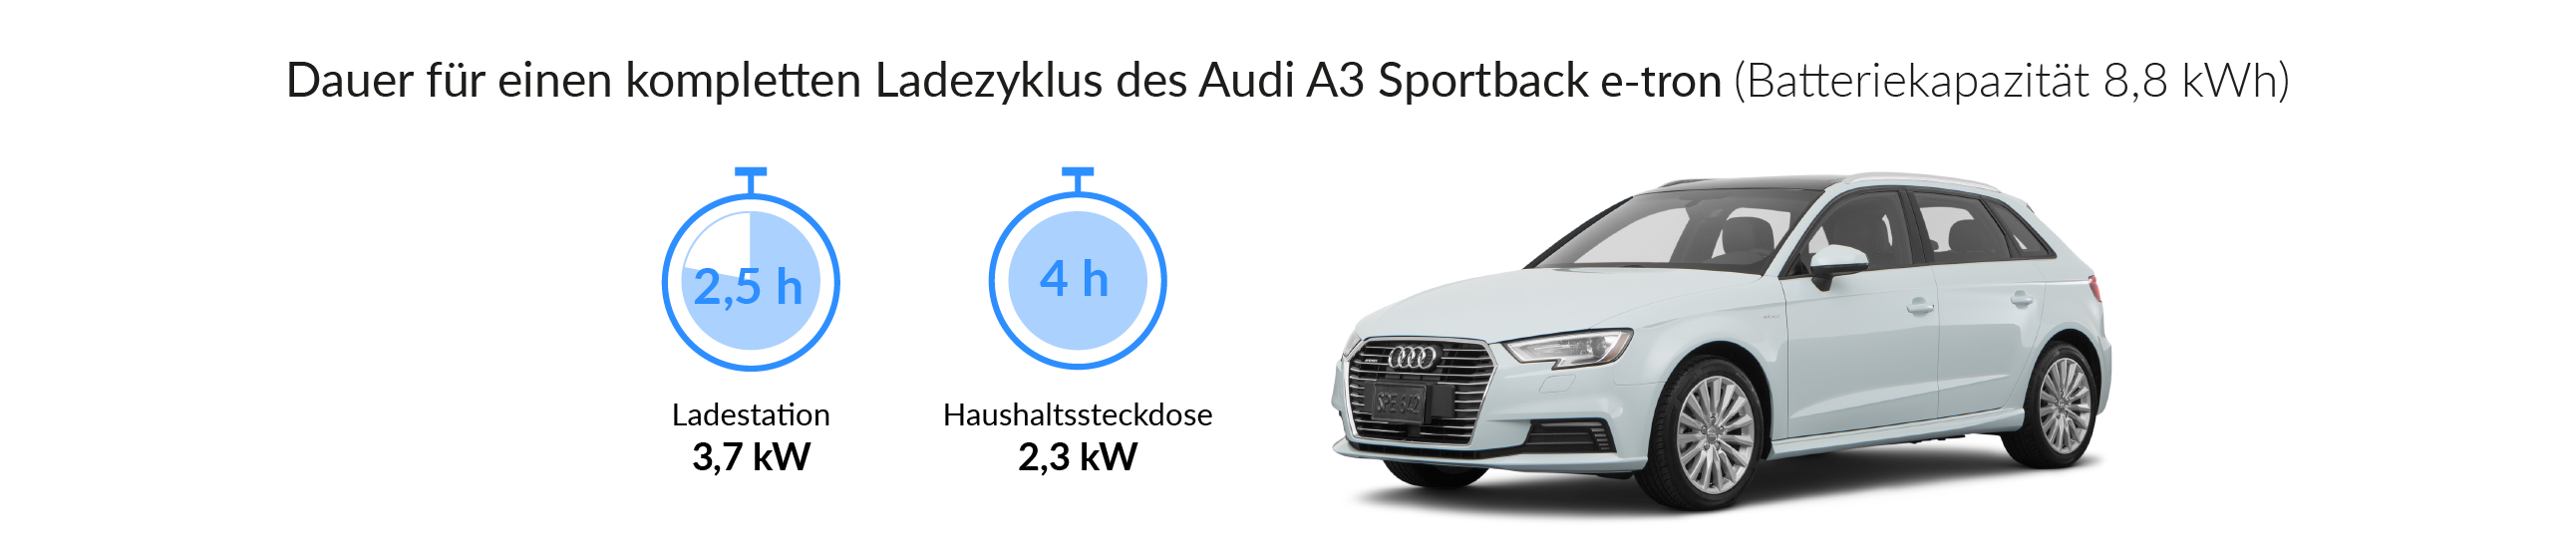 Ladezeiten des Audi A3 Sportback e-tron